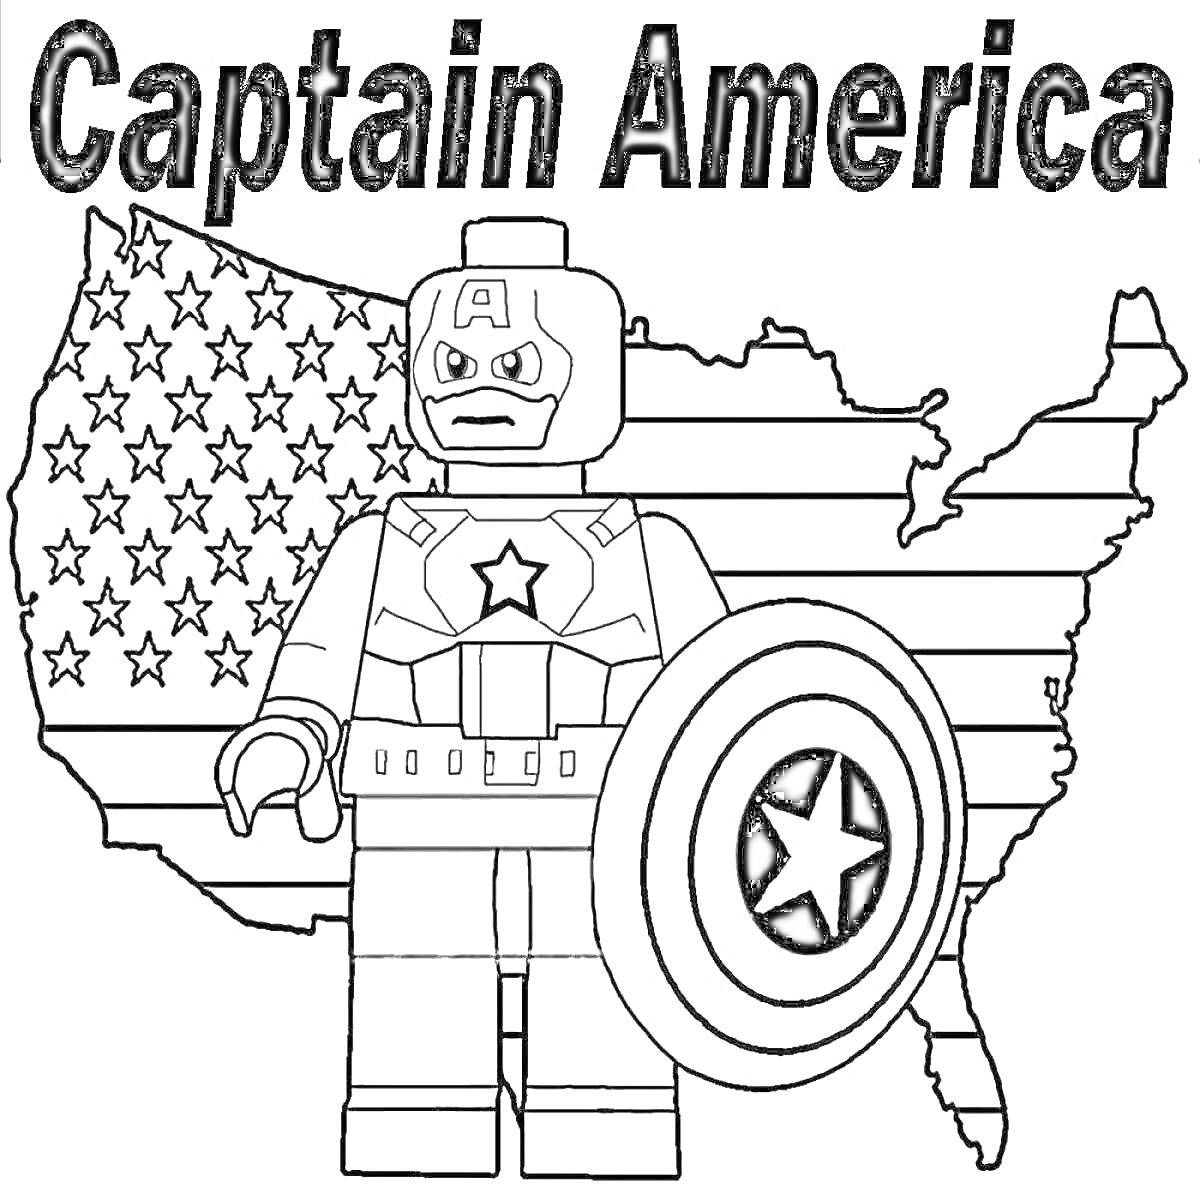 Раскраска Капитан Америка в стиле Лего на фоне карты США с флагом